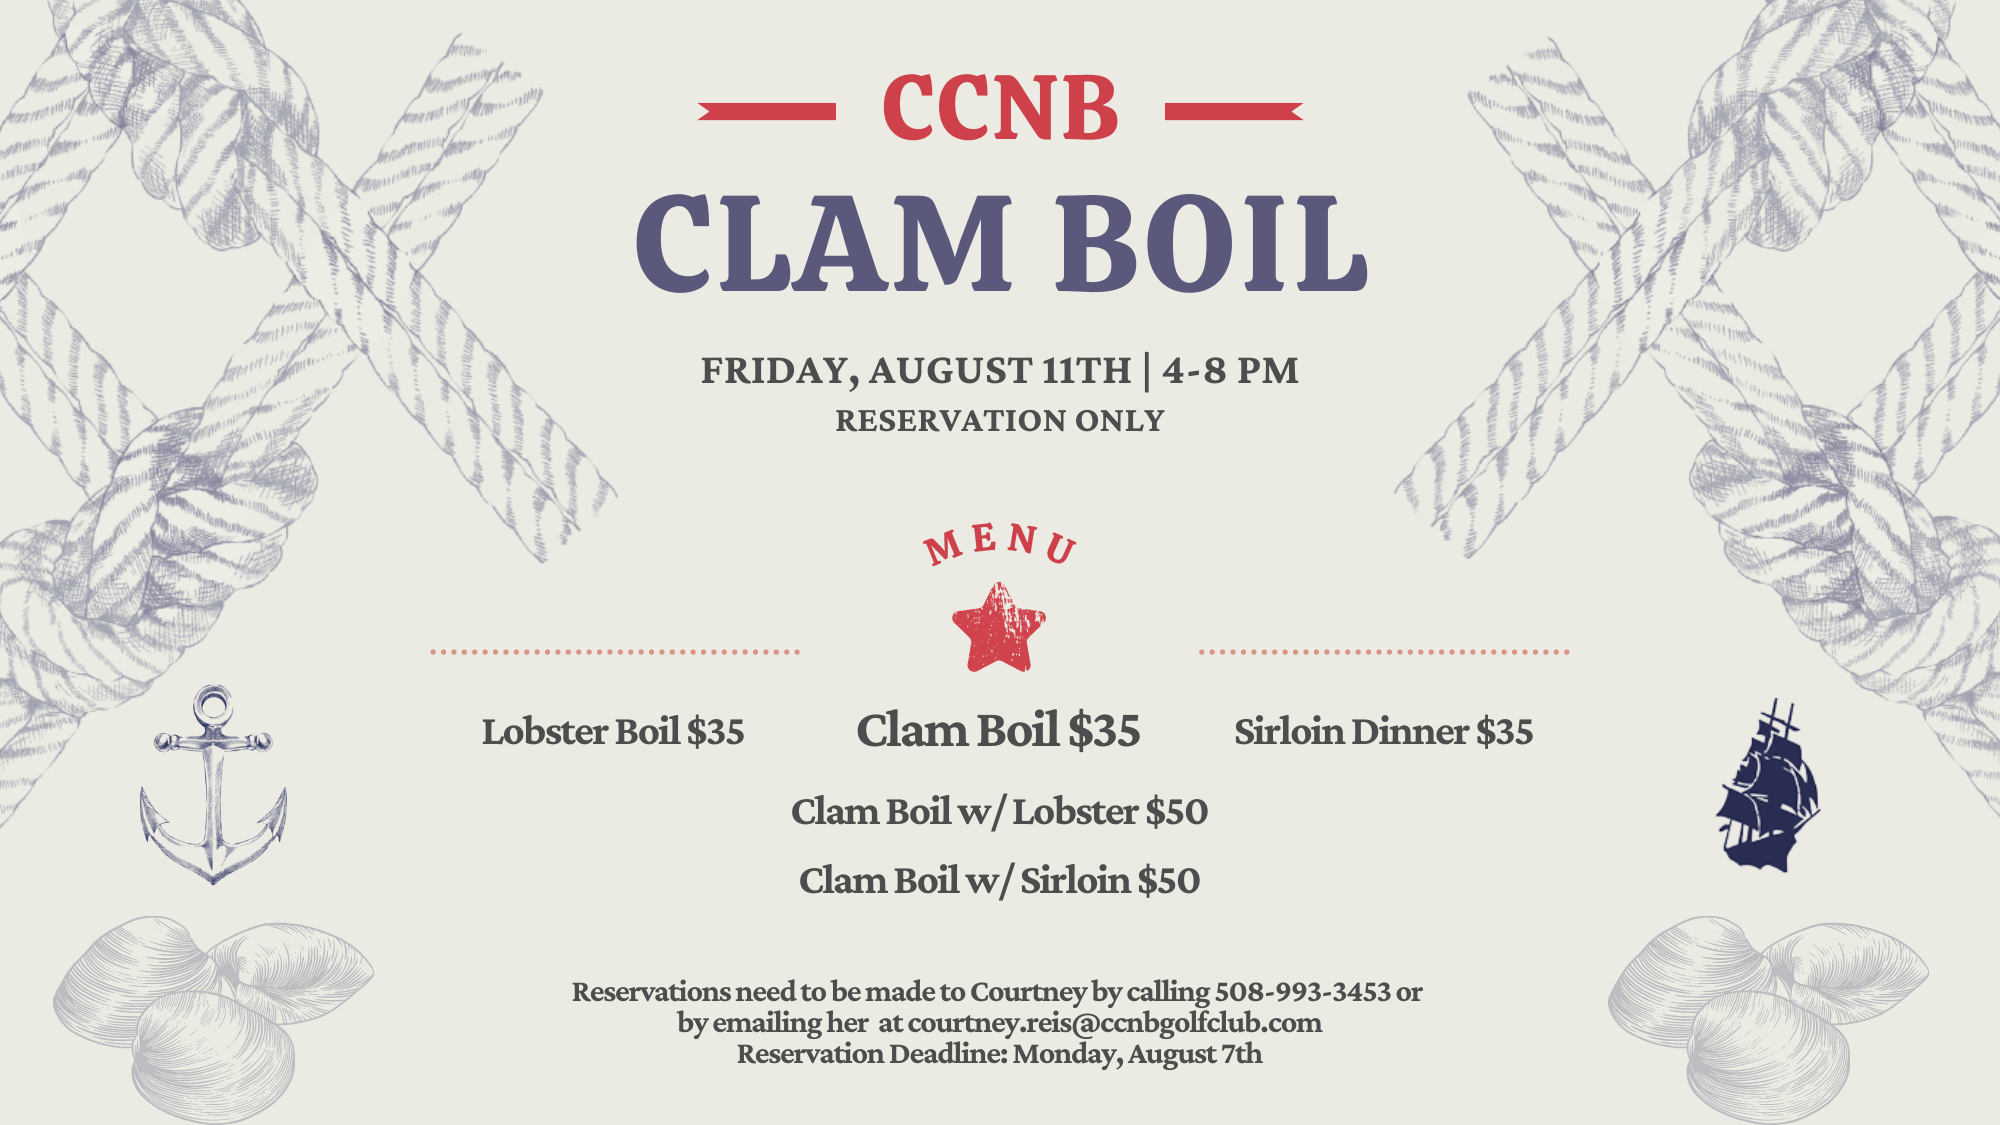 CCNB Clam Boil flyer 811 tv size